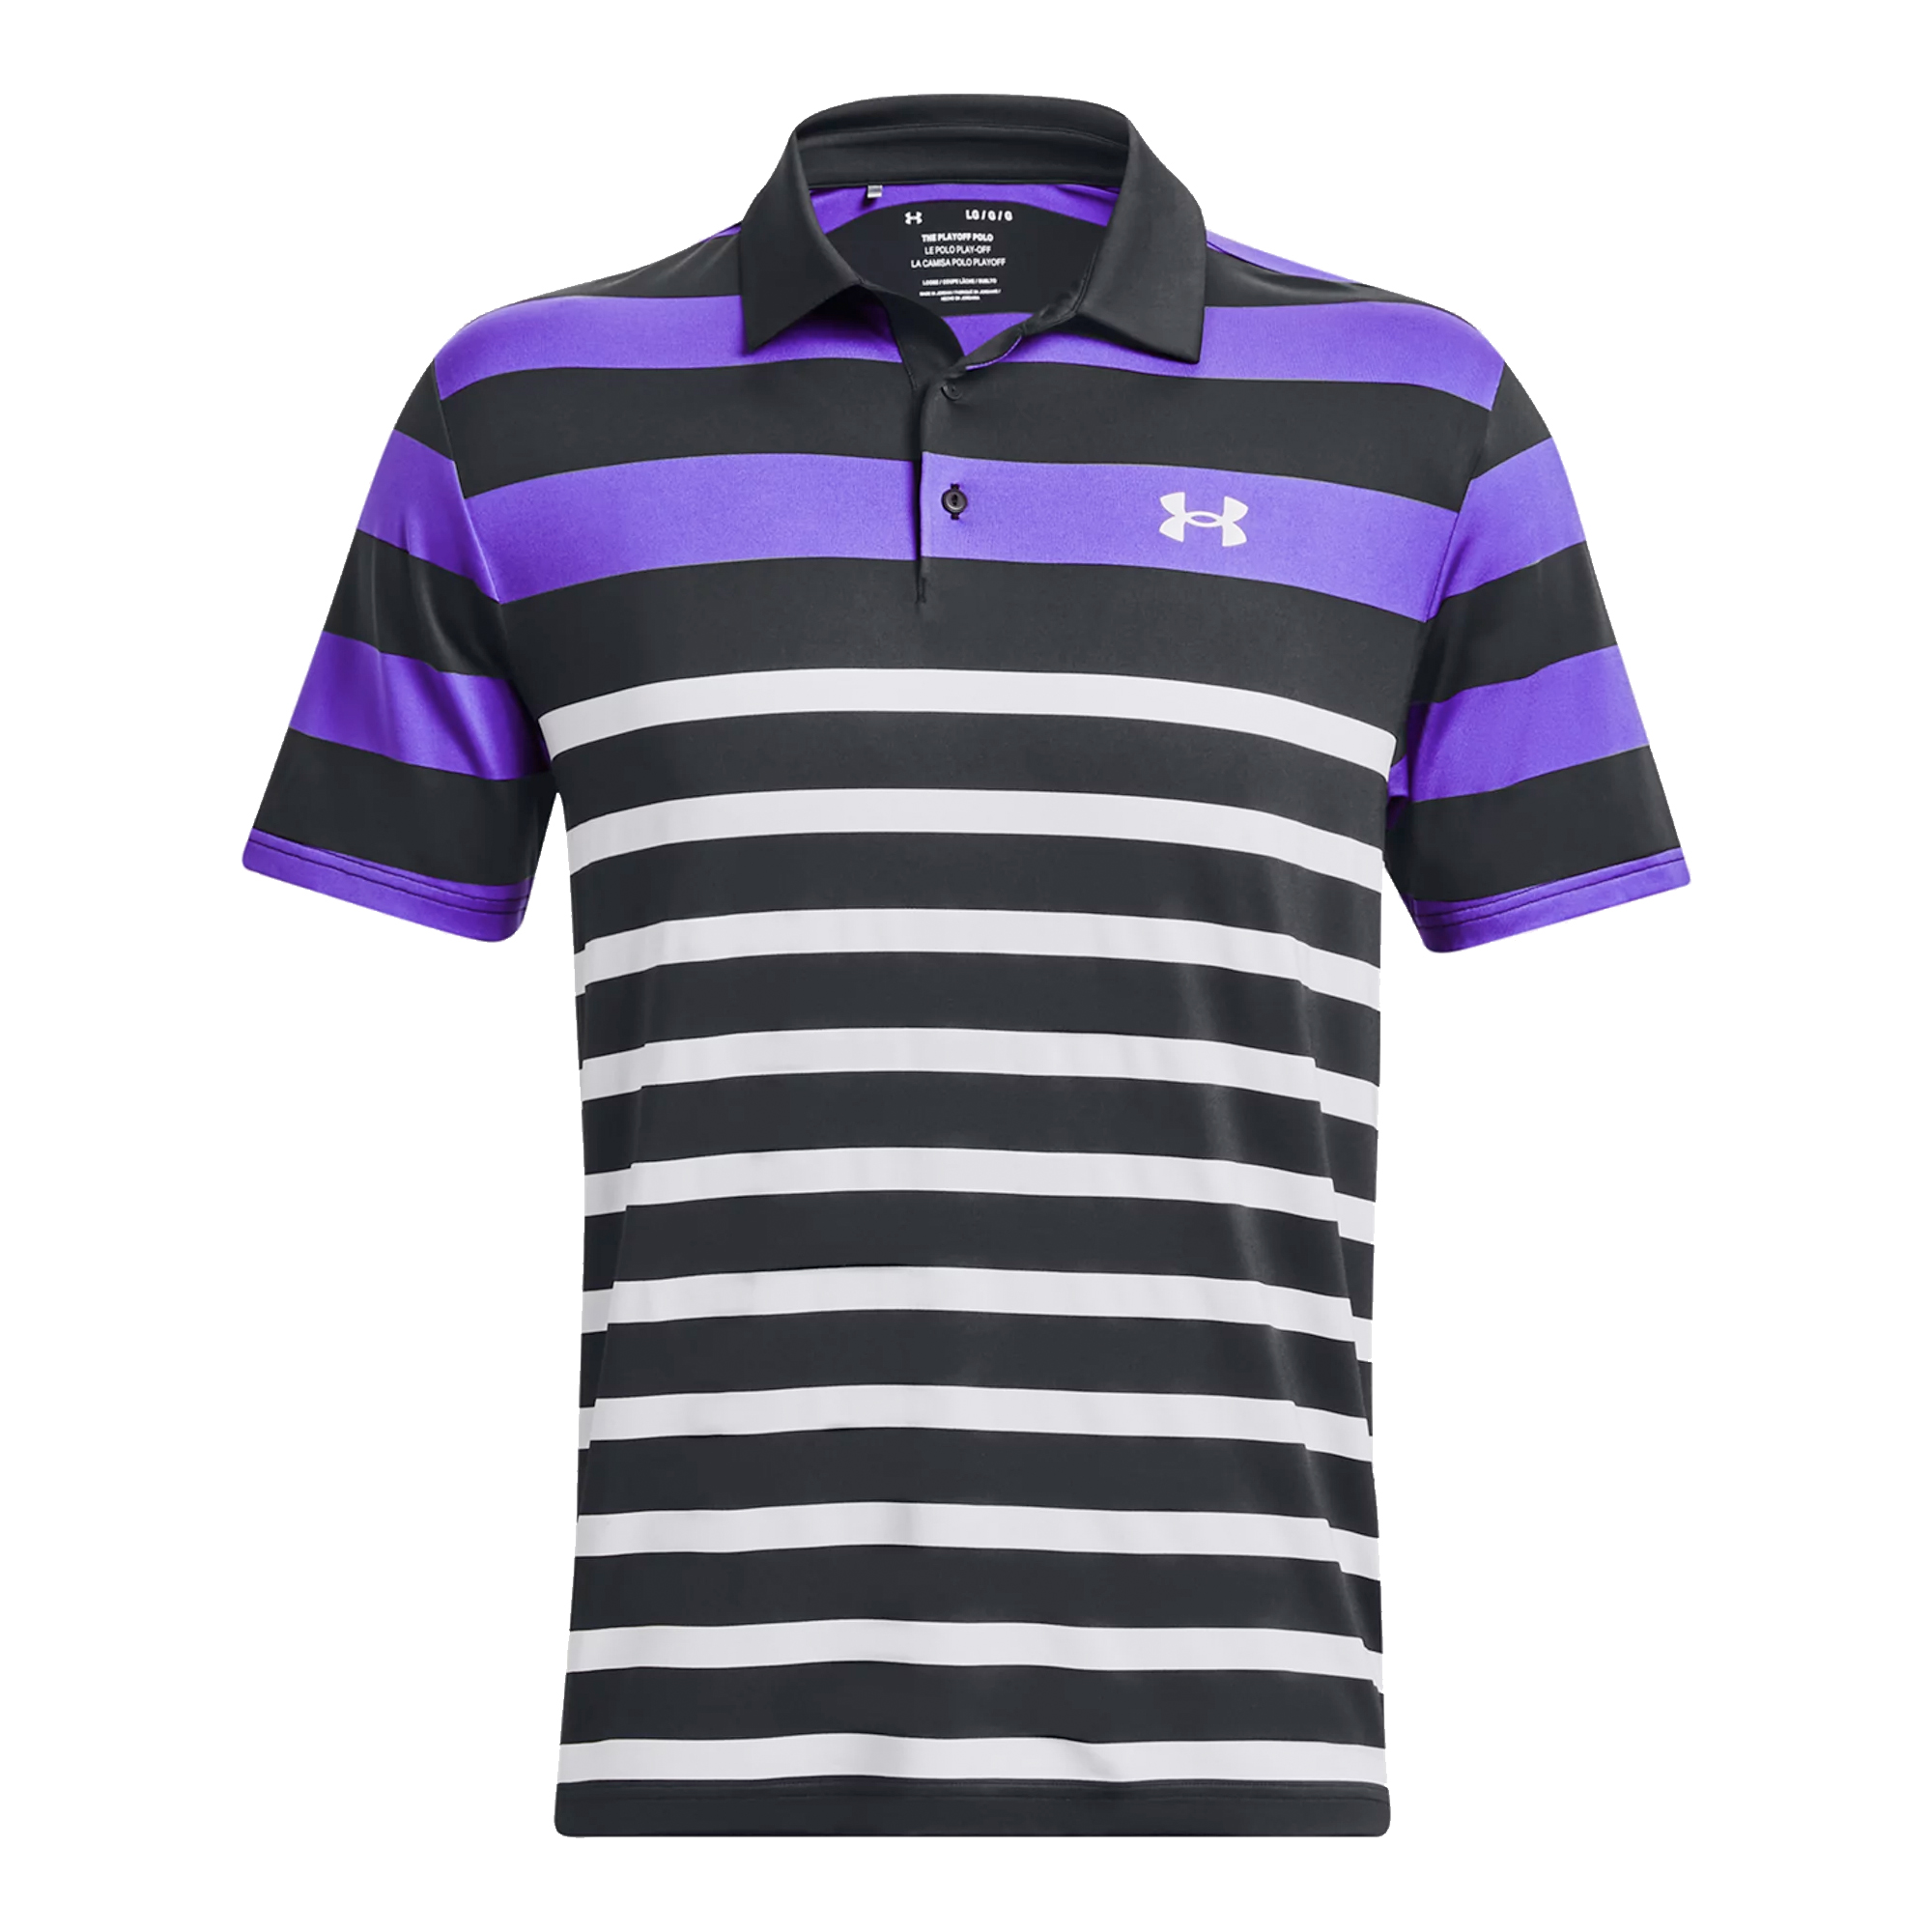 Under Armour Golf Playoff 3.0 Stripe Polo Shirt  - Black/Electric Purple